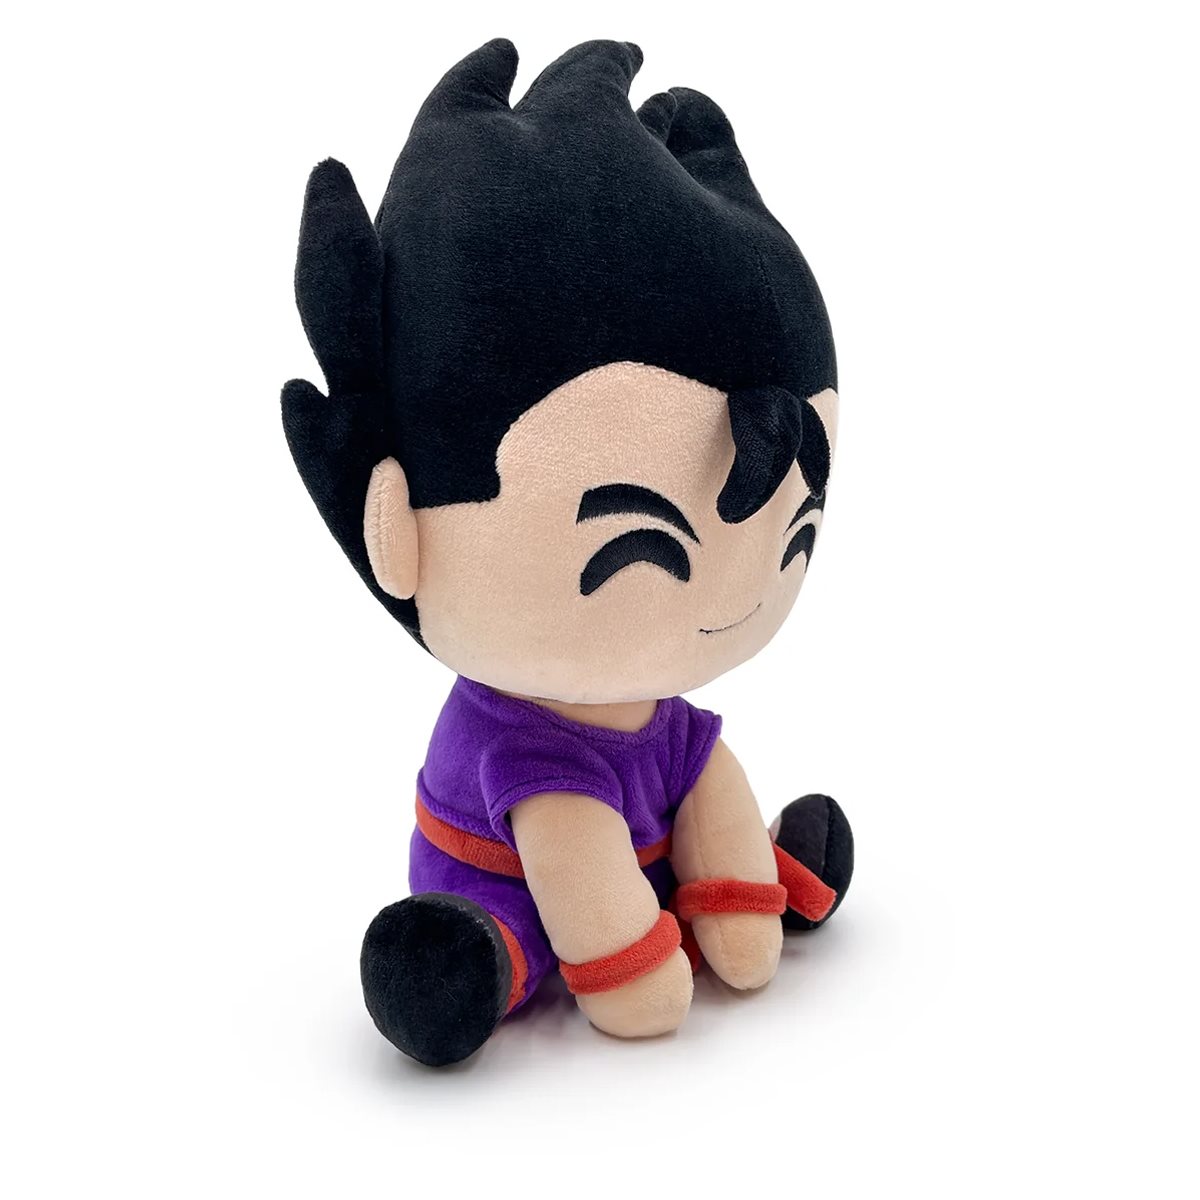 Super Saiyan Goku Plush (9in) – Youtooz Collectibles